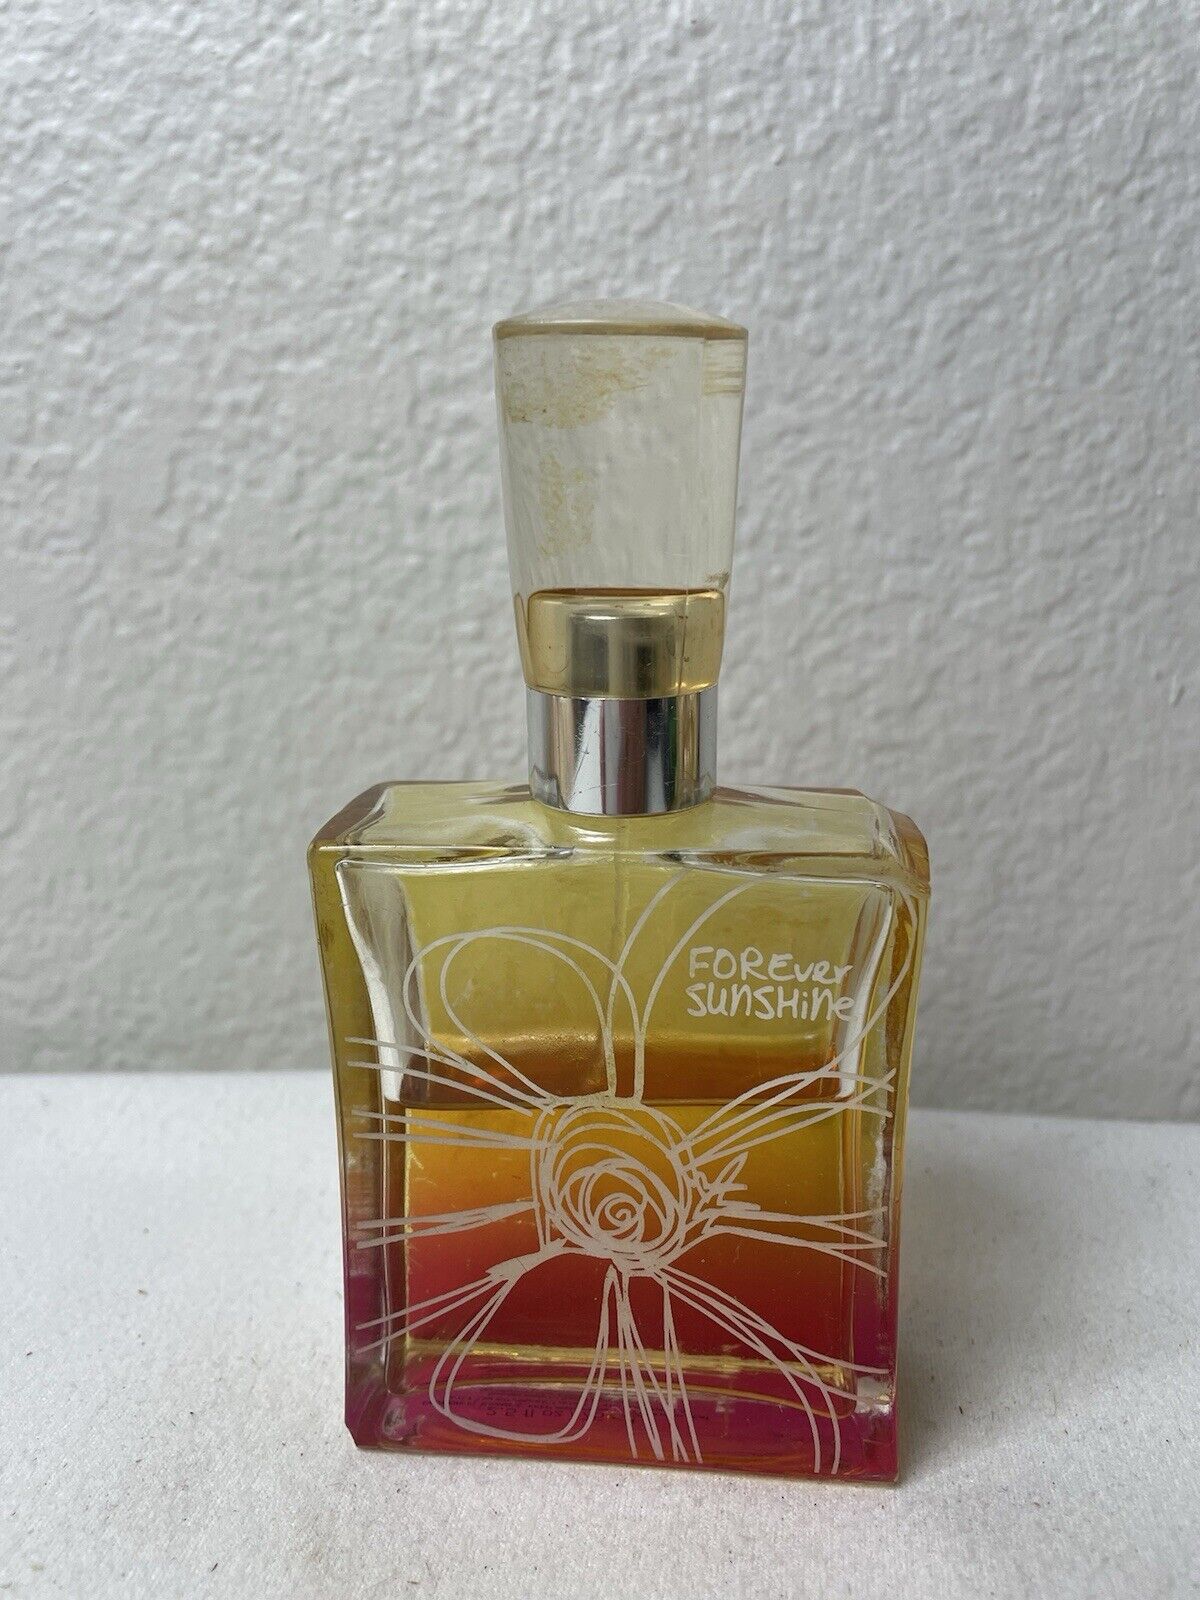 Bath & Body Works Forever Sunshine Signature Perfume Spray 2.5 oz 60% Full